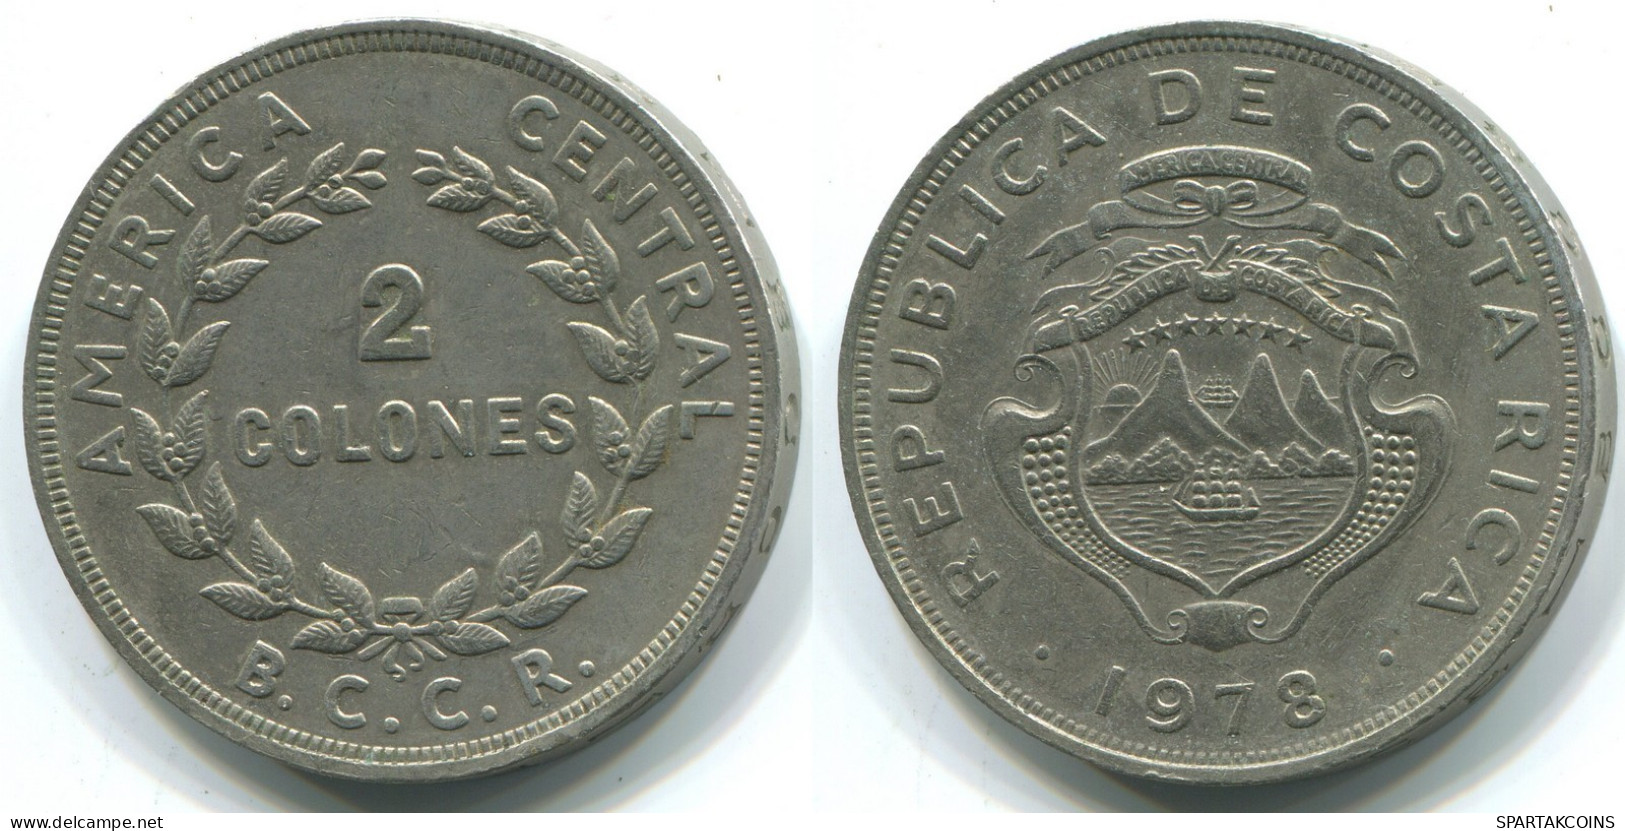 2 COLONES 1978 COSTA RICA Coin #WW1168.U.A - Costa Rica